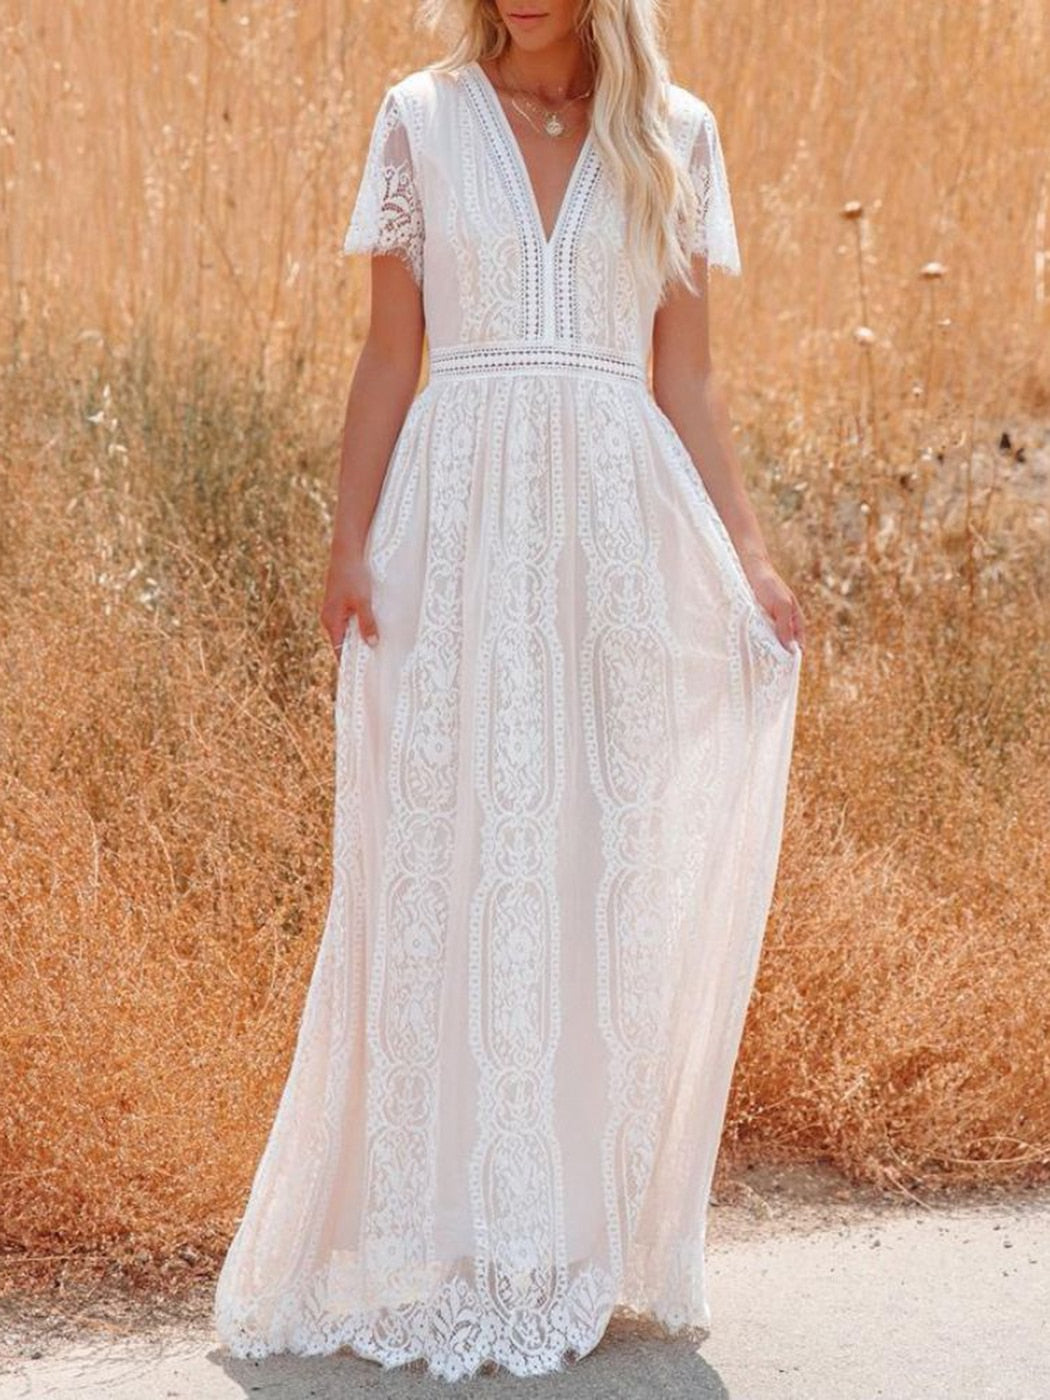 Bohemian Maxi Embroidery White Lace long Tunic Beach Dress